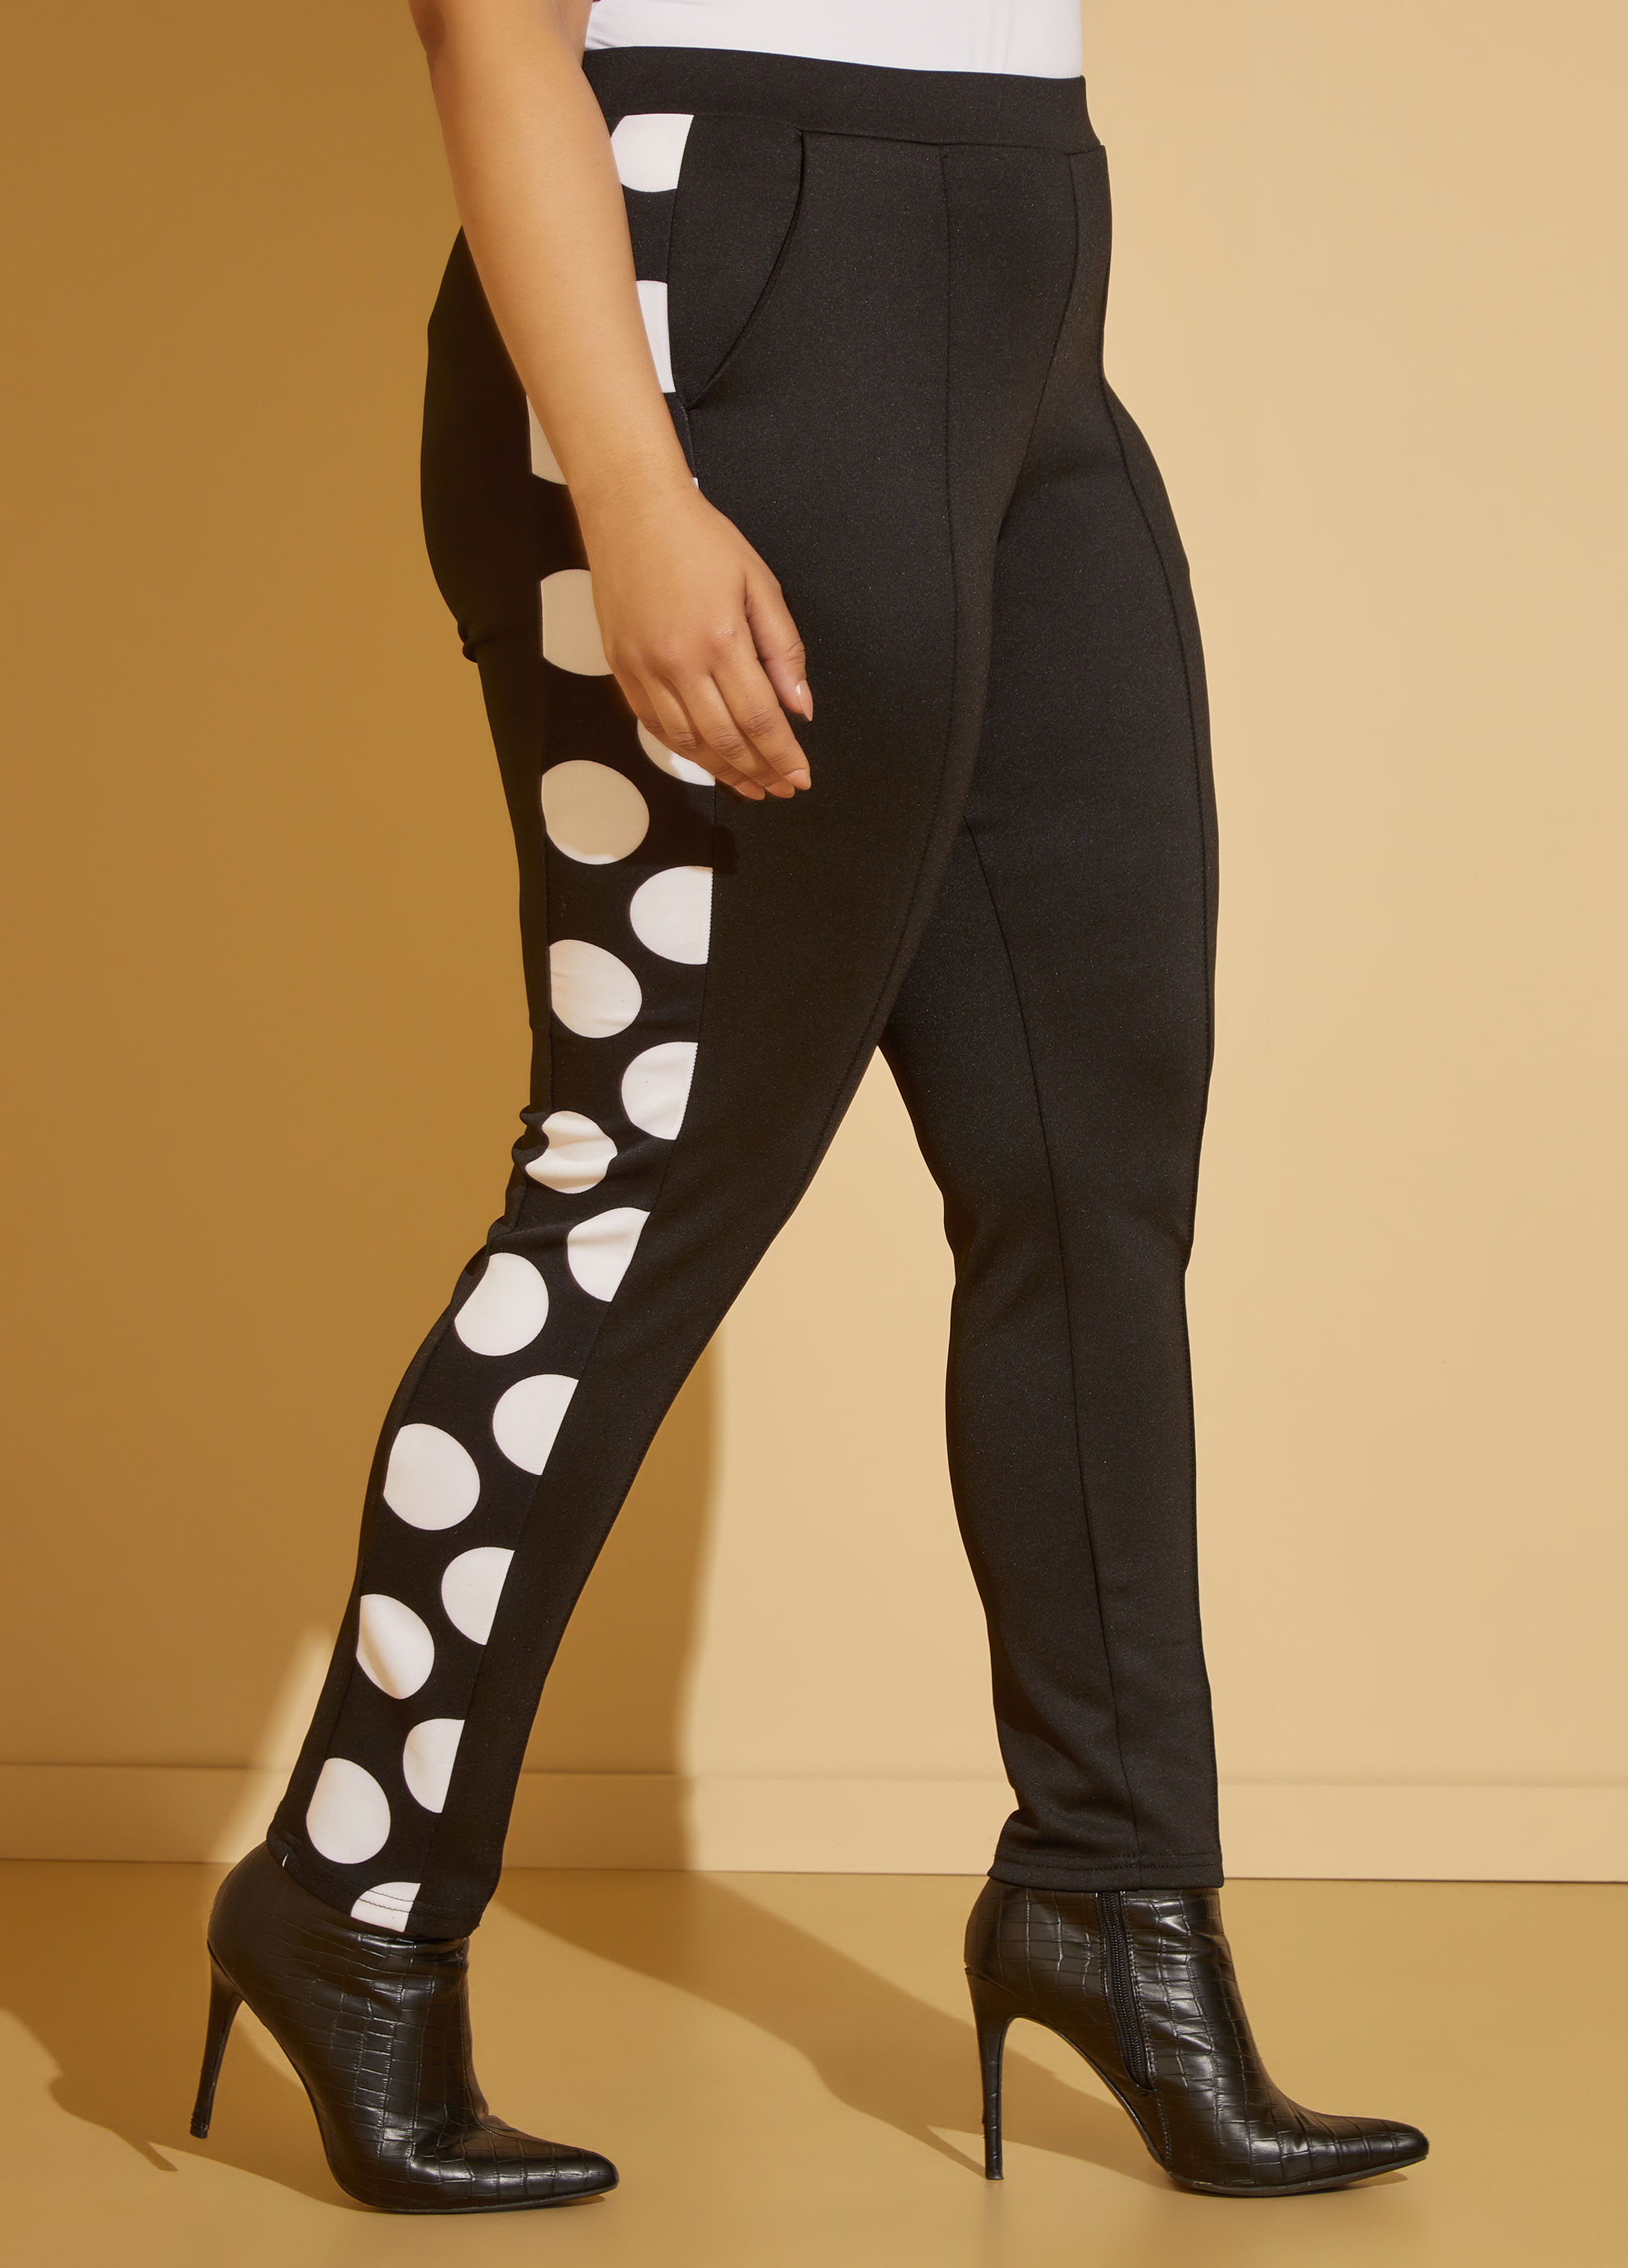 Tek Gear Polka Dots Black Leggings Size 2X (Plus) - 47% off